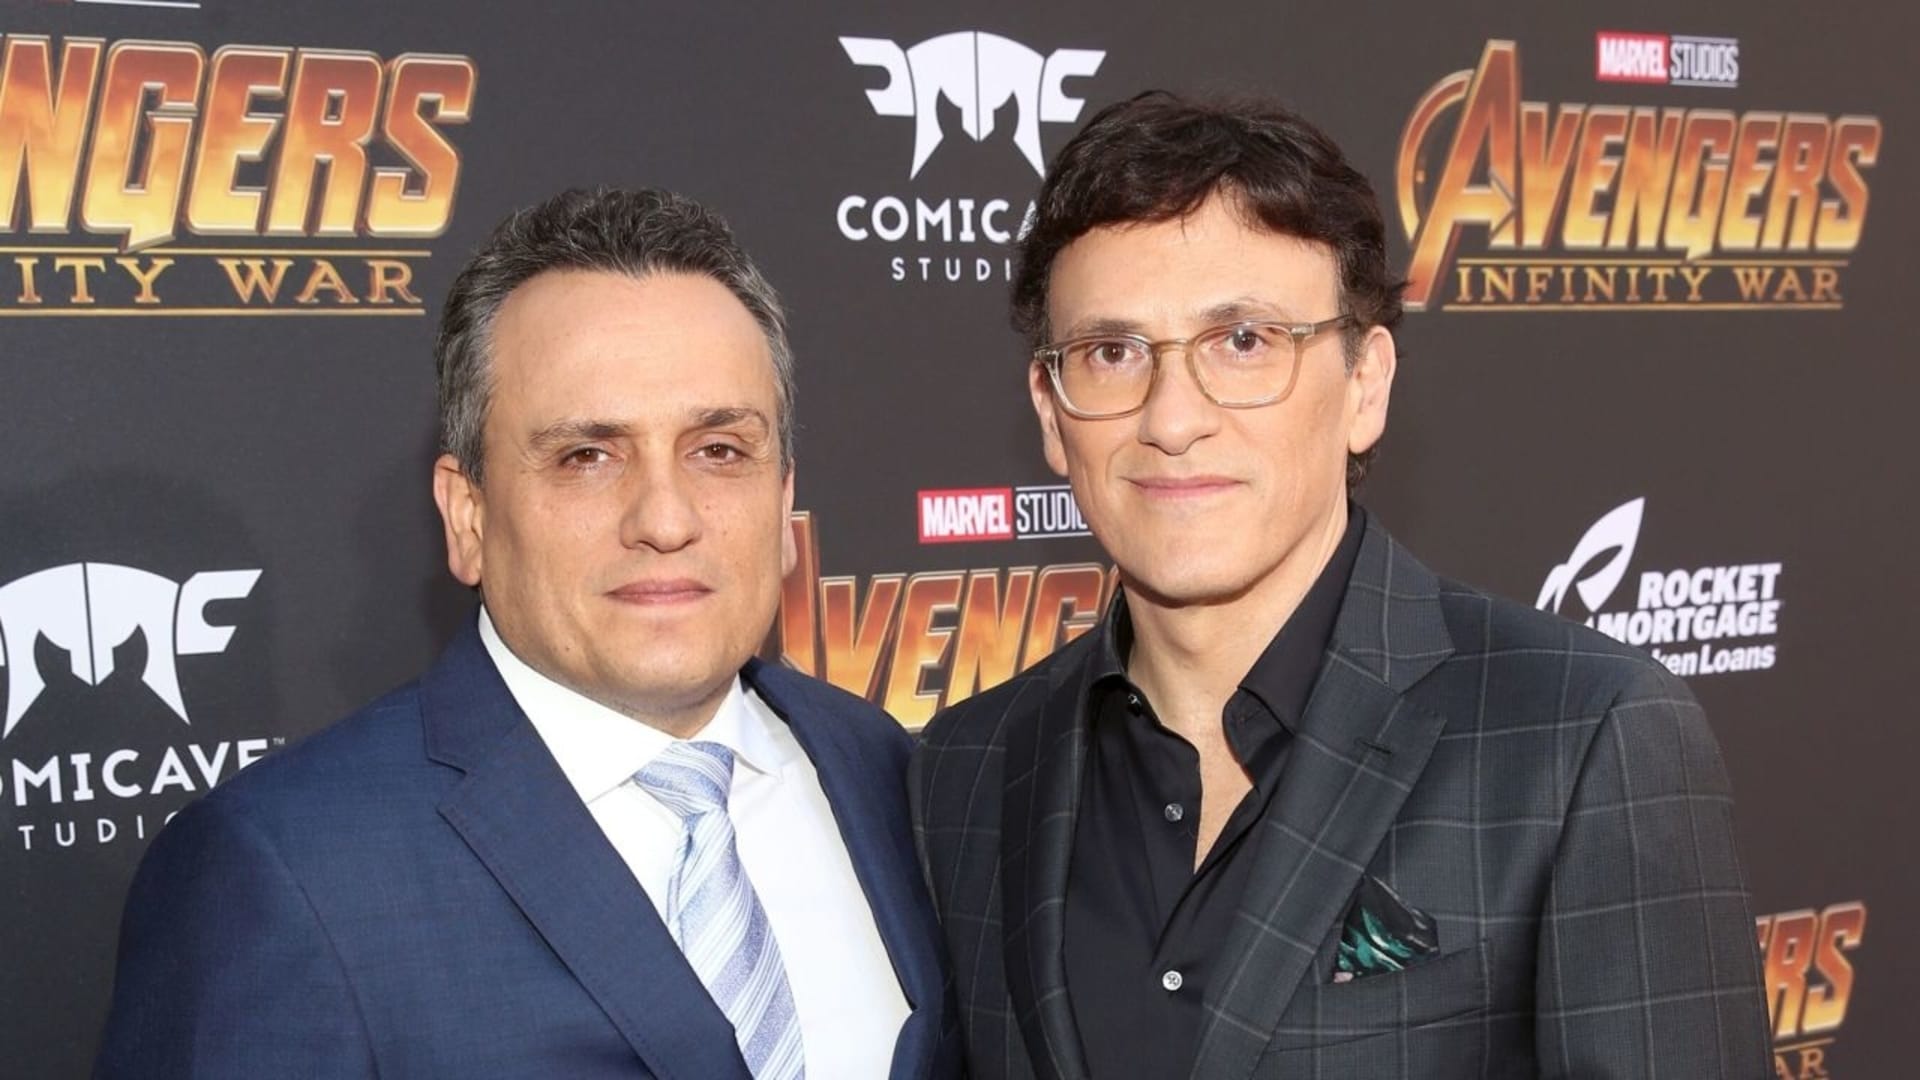 The directors love the film Avengers:Endgame